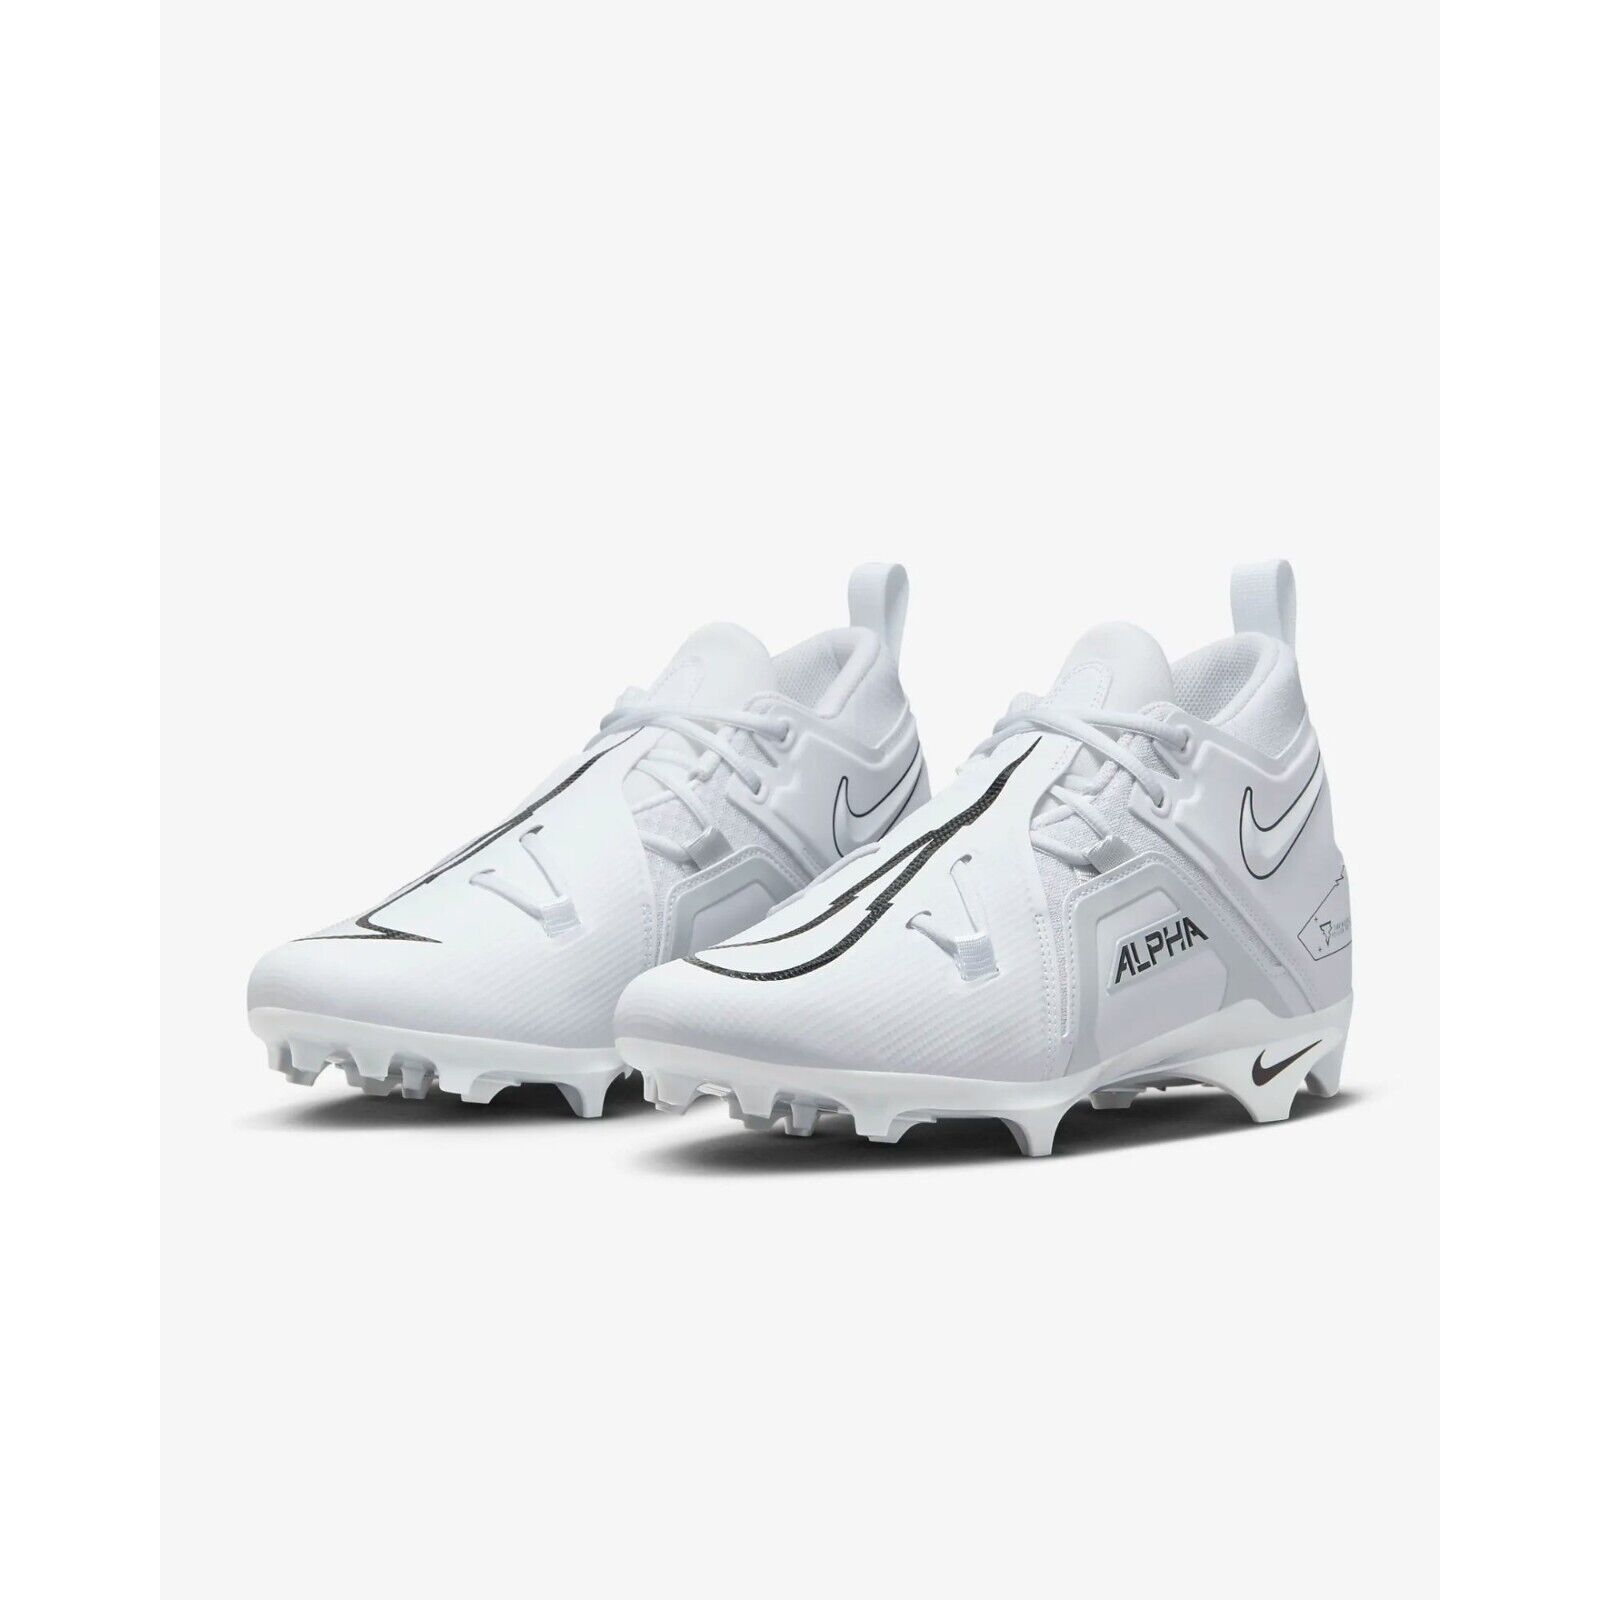 Nike Mens Alpha Menace Pro 3 Football Shoes Cleats CT6649-109 White Black Size 8 - $100.00